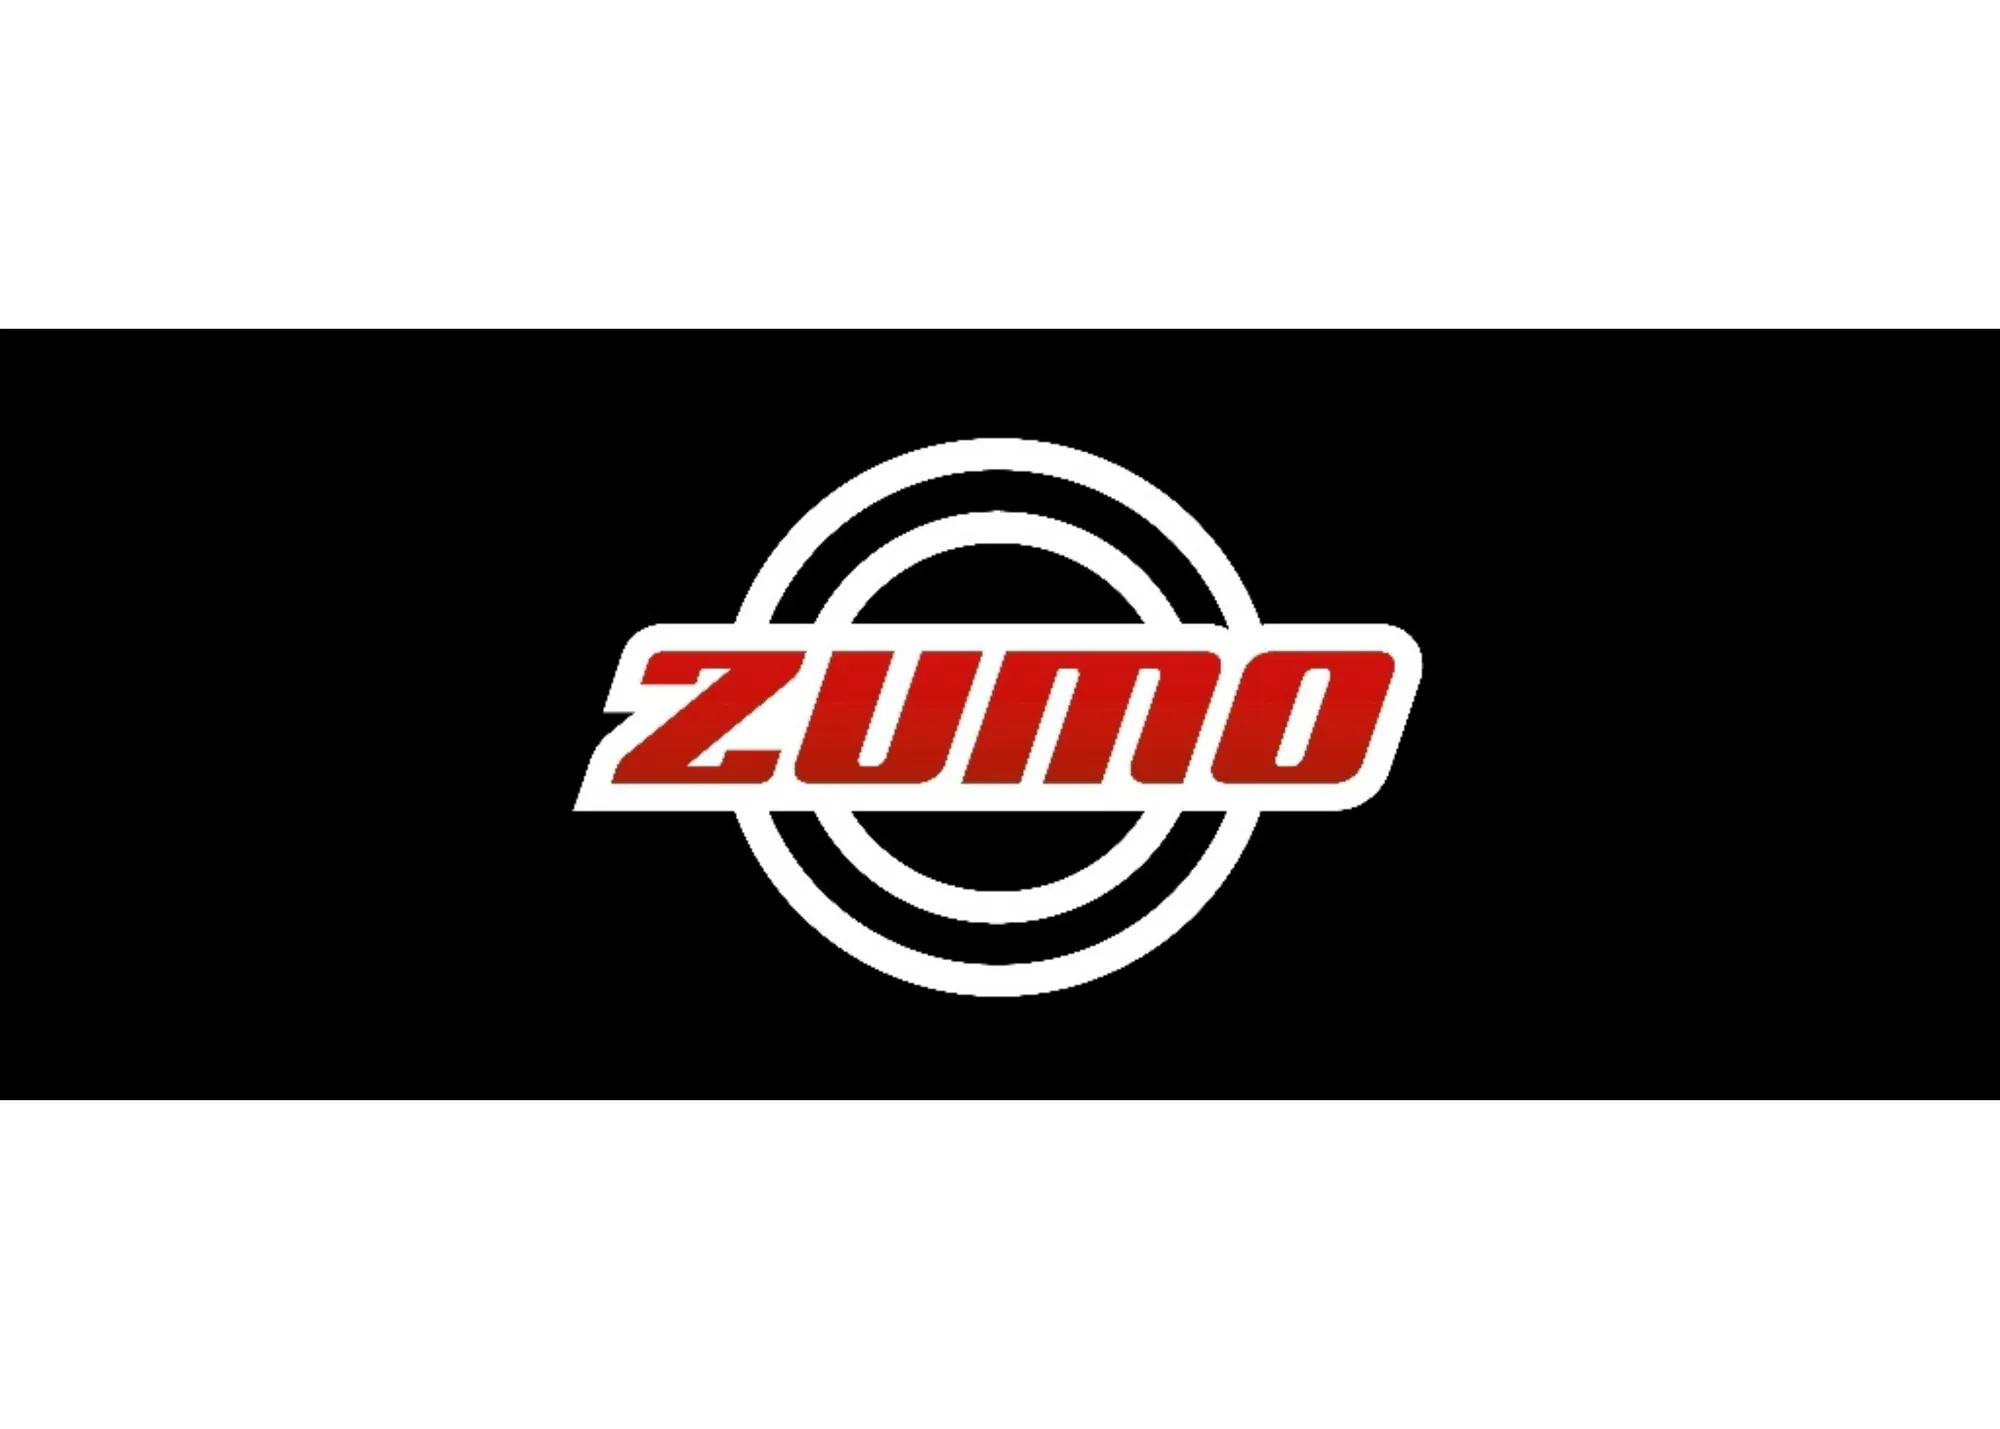 Zumo Coffee House